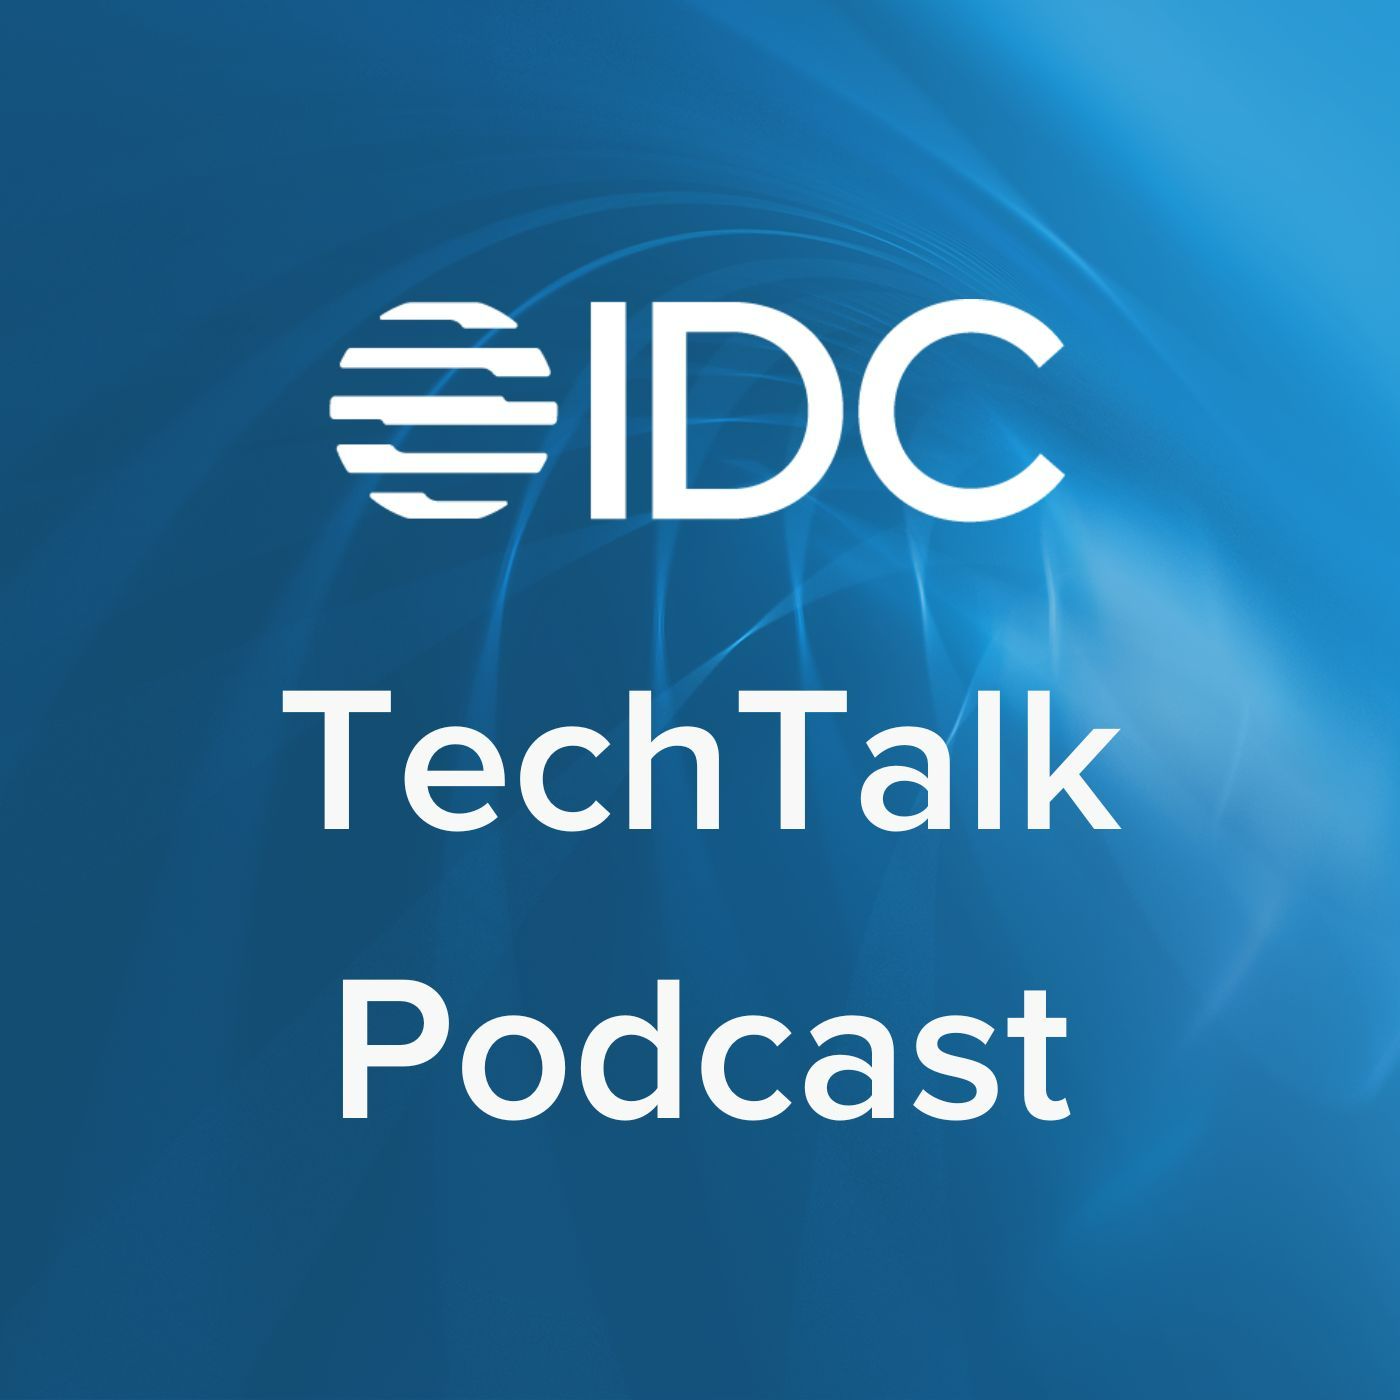 IDC TechTalk